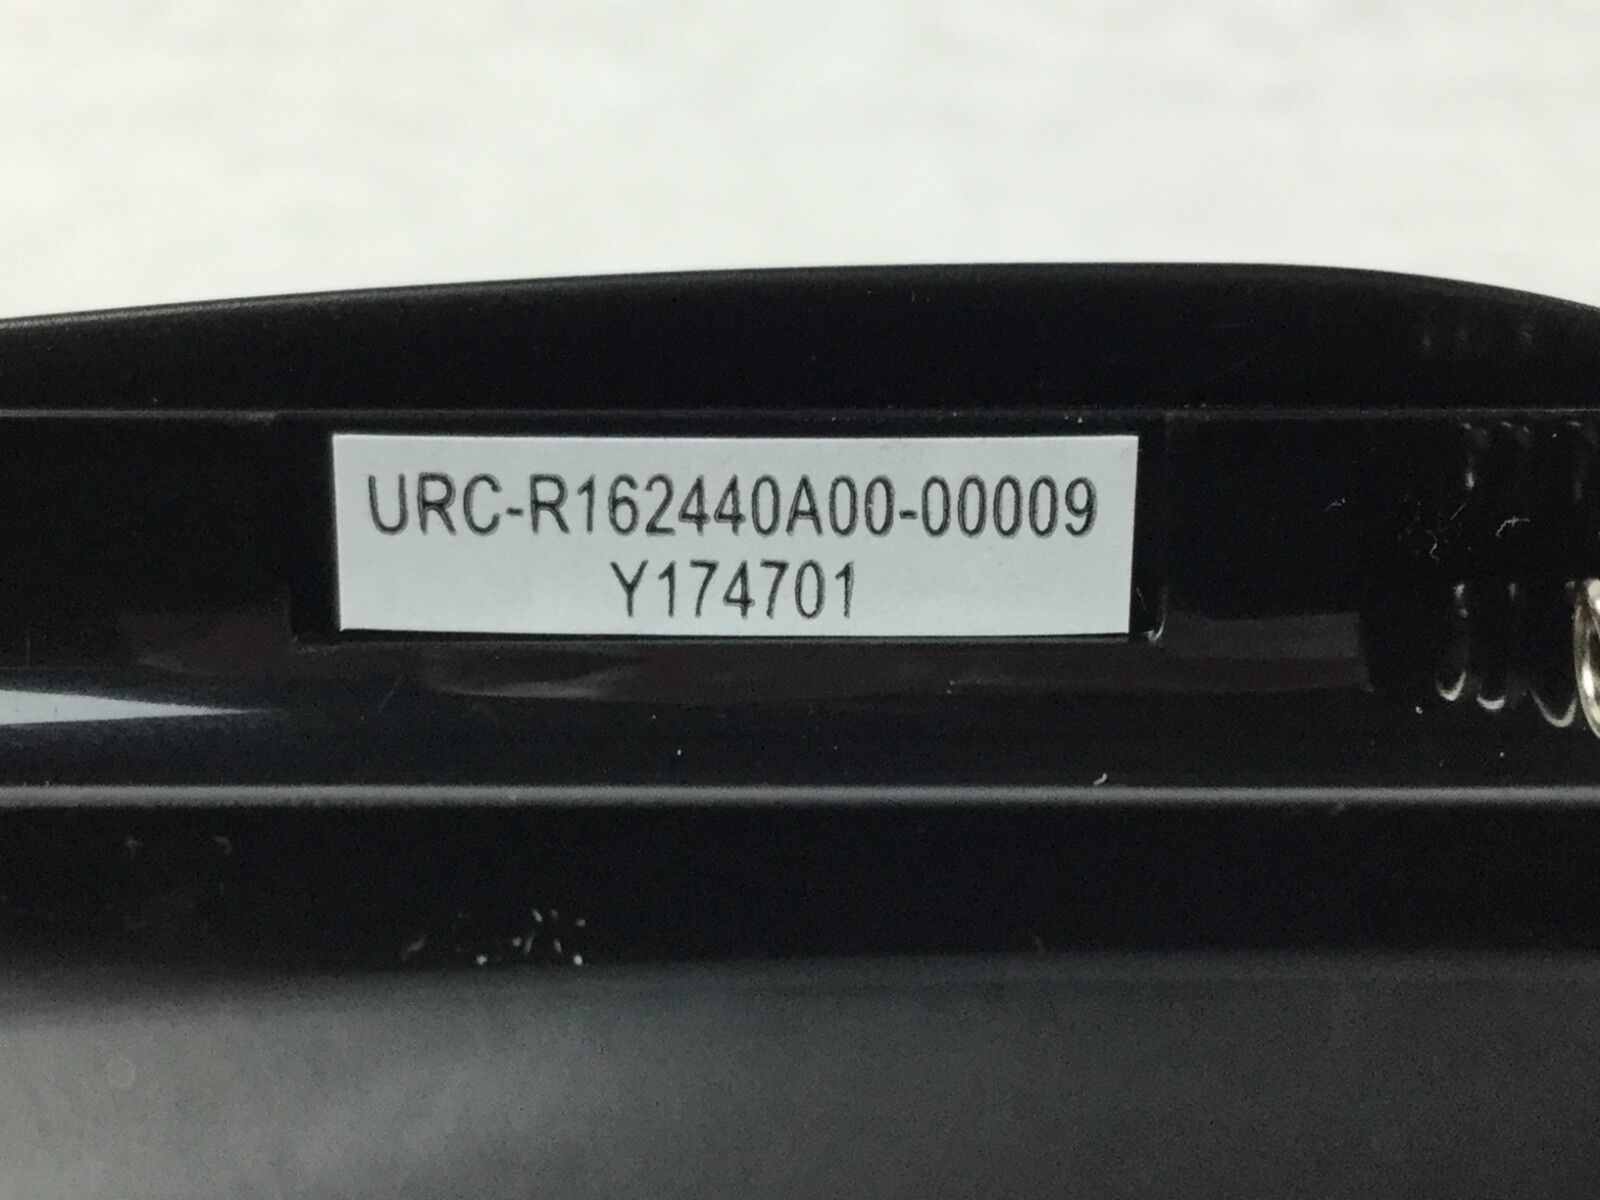 Remote Control URC-R162440A00-00009